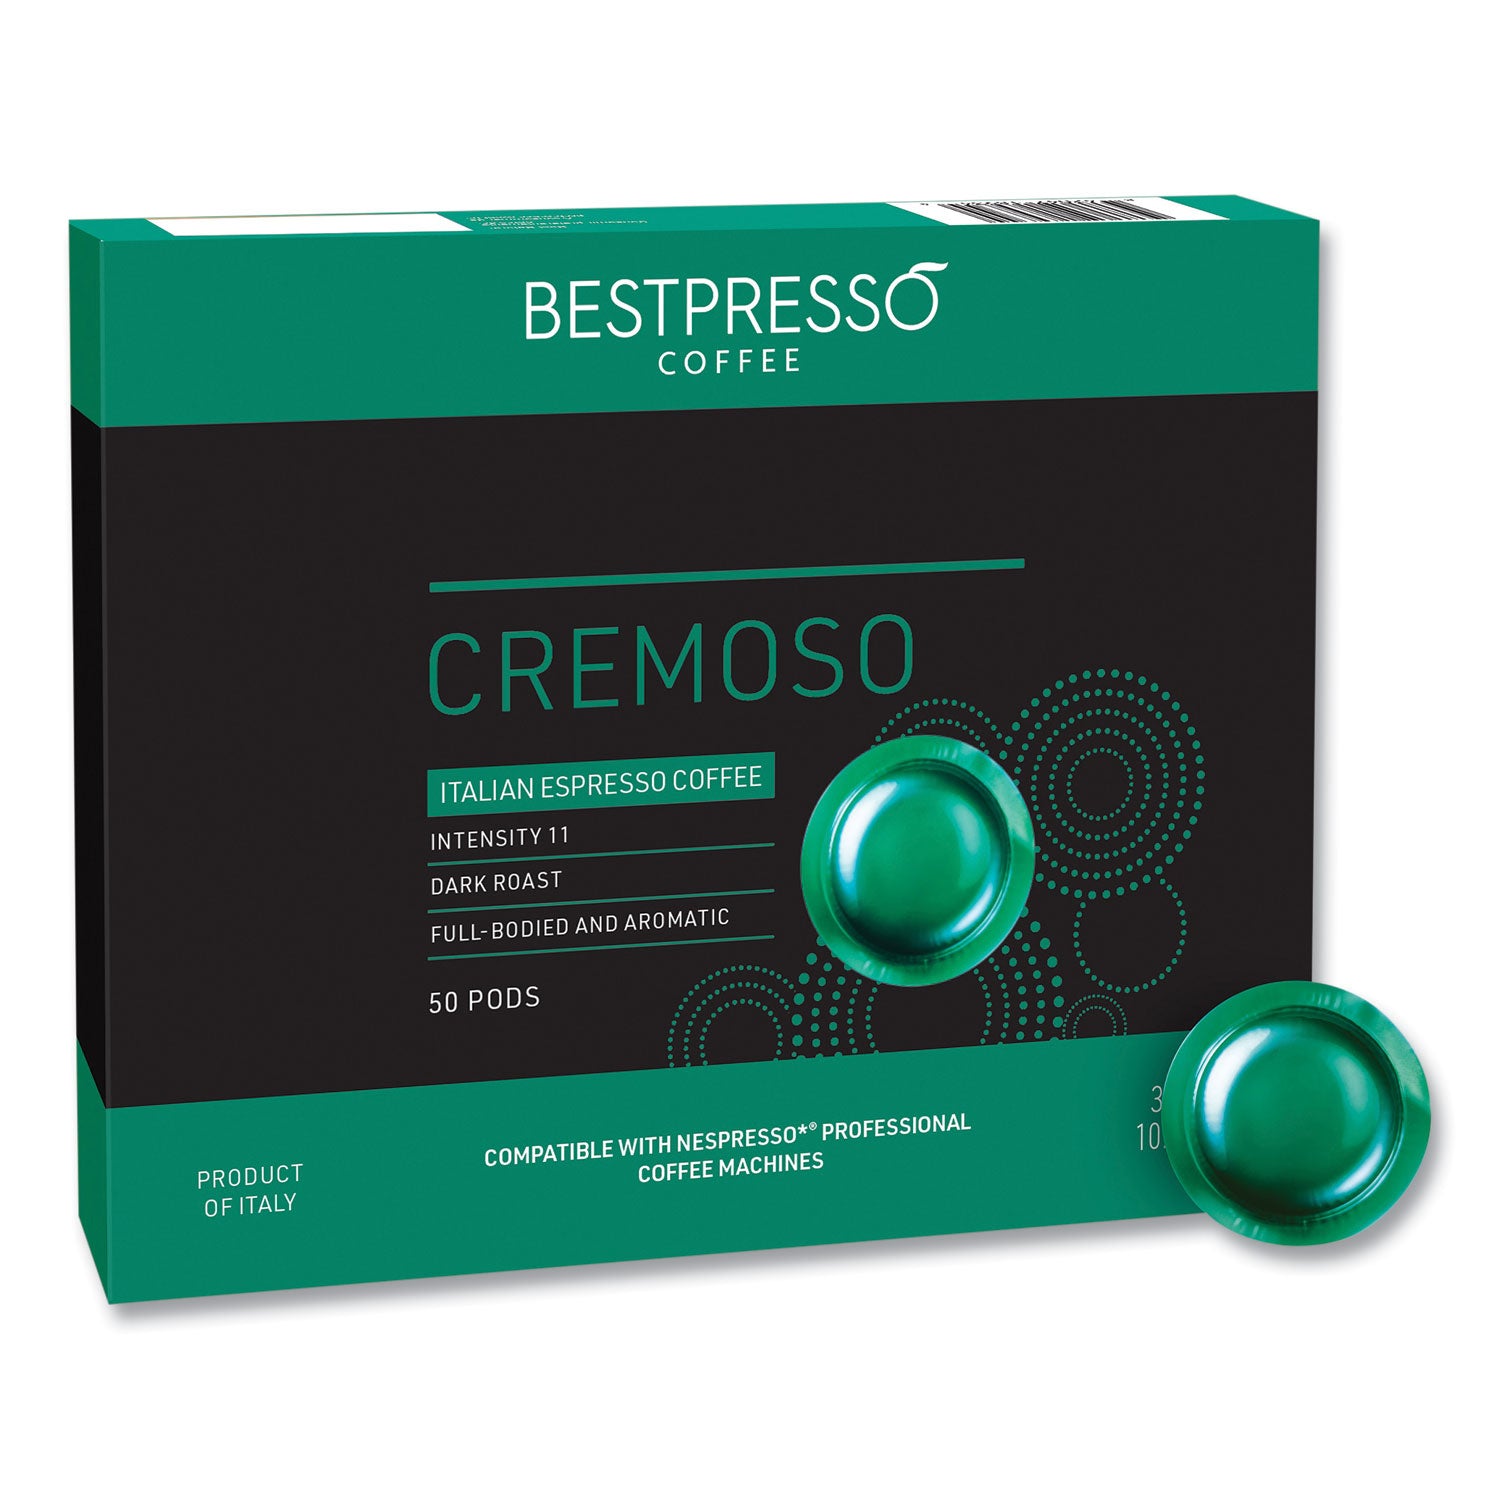 nespresso-professional-cremoso-coffee-pods-021-oz-50-box_bpsbst18968 - 1